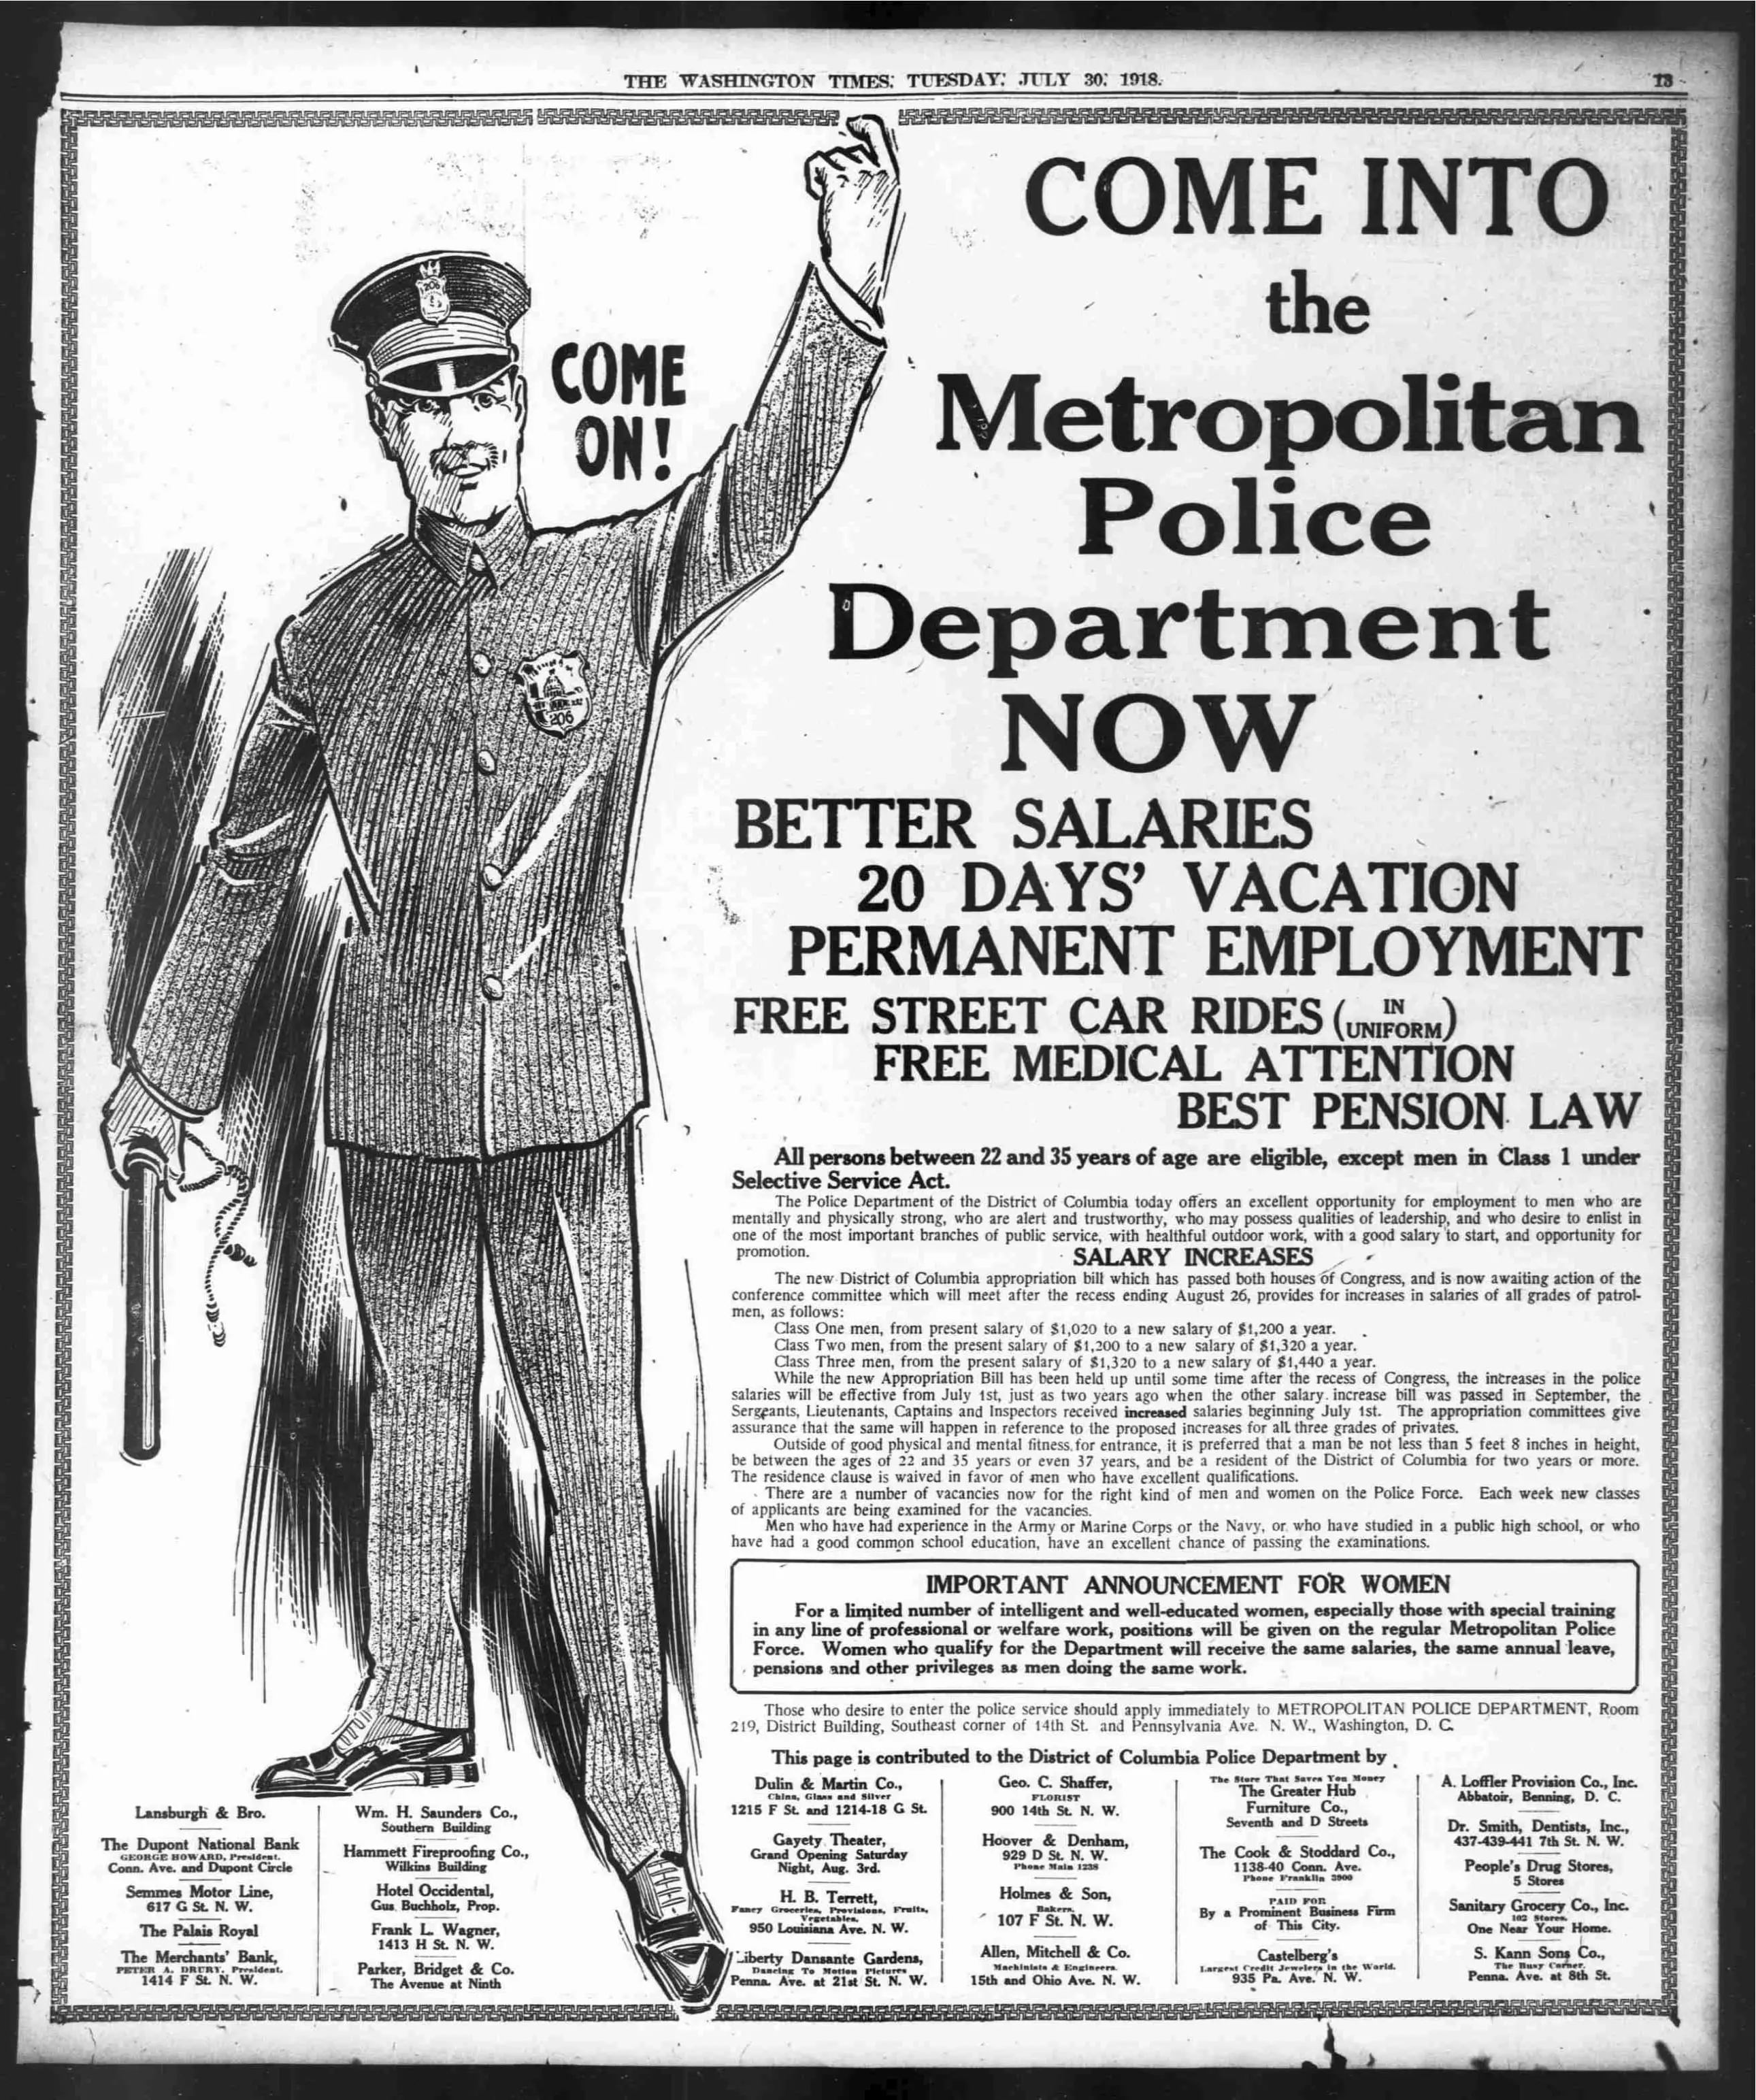 Metropolitan Police Department recruitment advertisement - July 30th, 1918 (Washington Times)